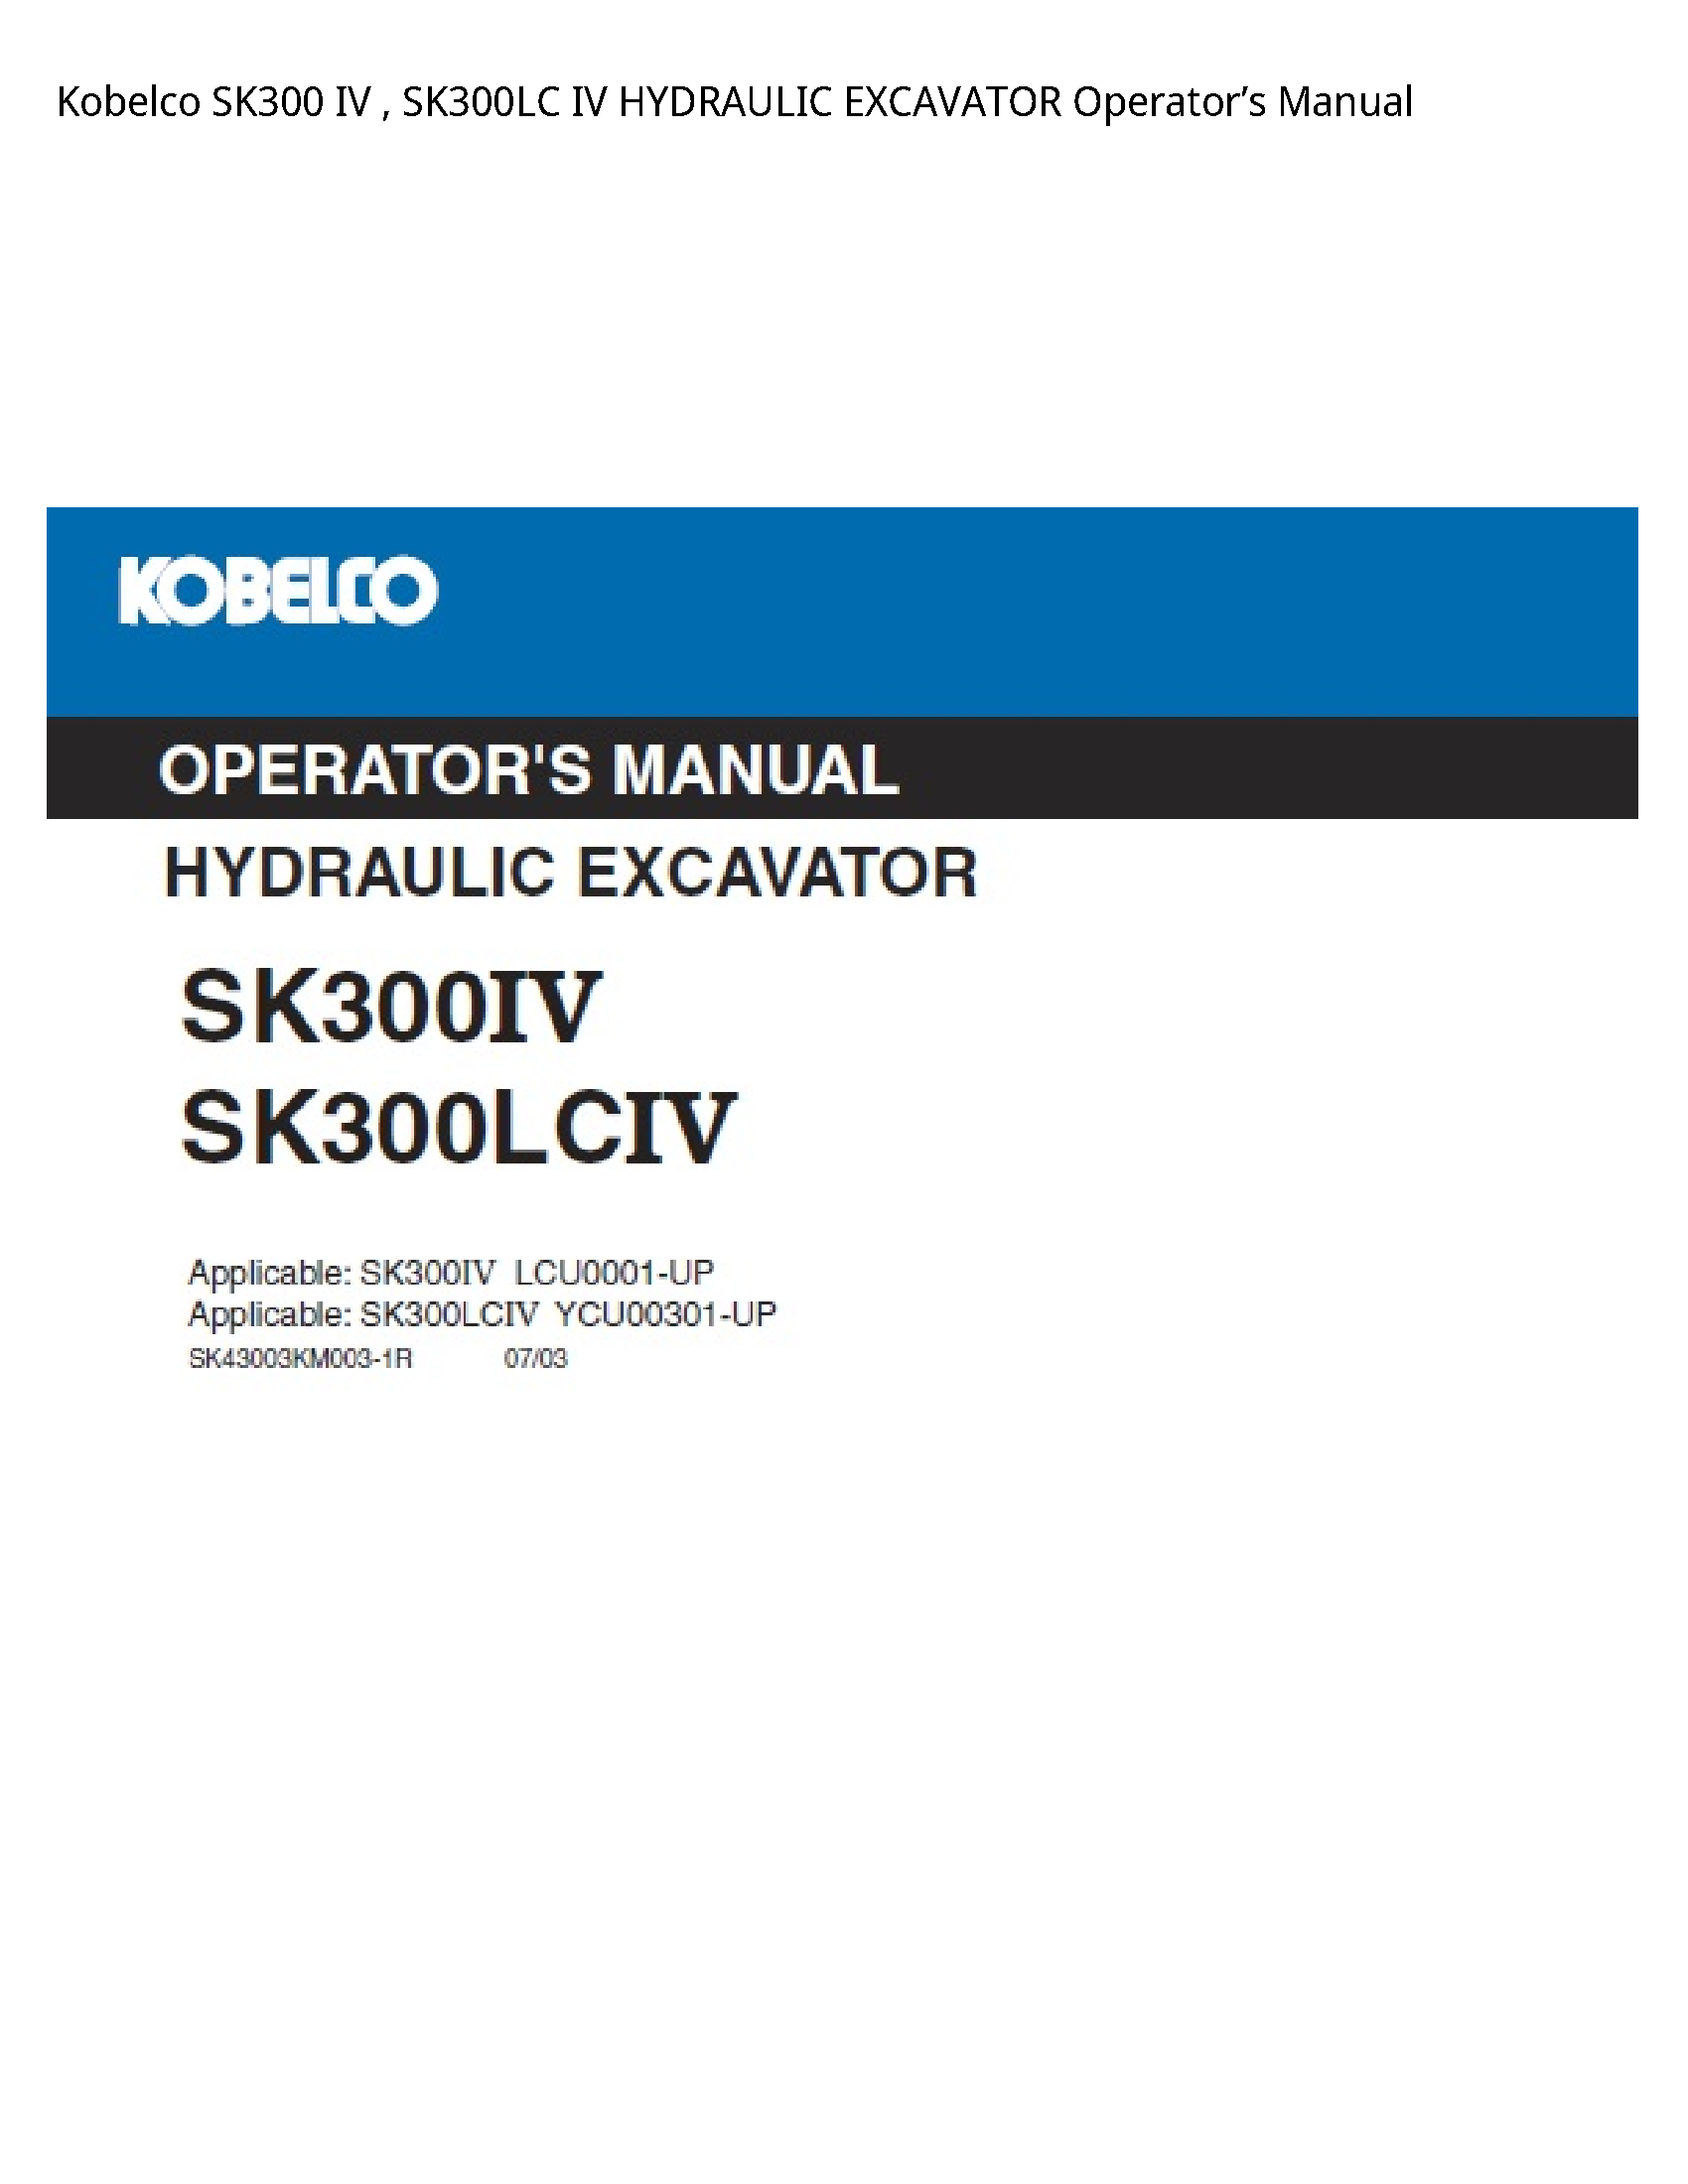 Kobelco SK300 IV IV HYDRAULIC EXCAVATOR Operator’s manual